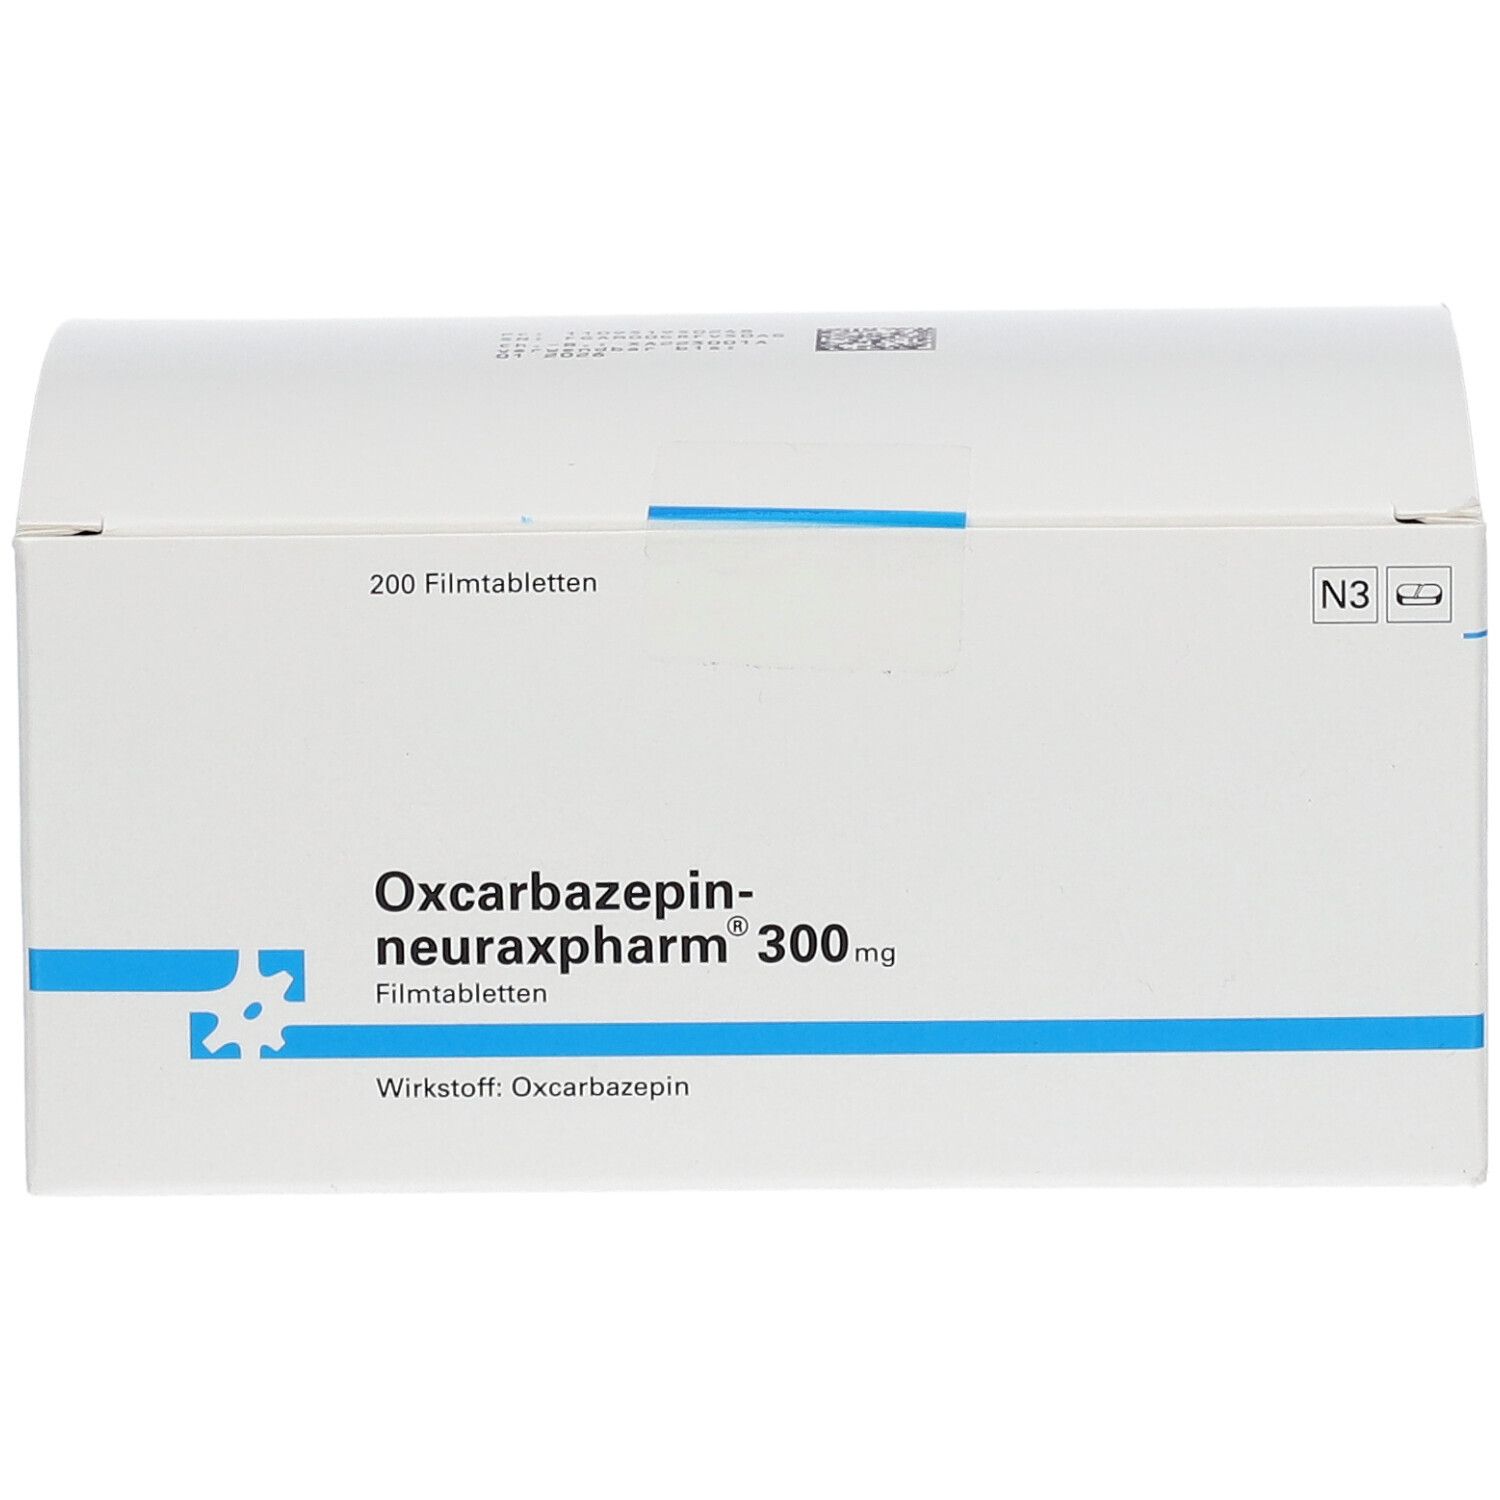 Oxcarbazepin-neuraxpharm® 300 mg